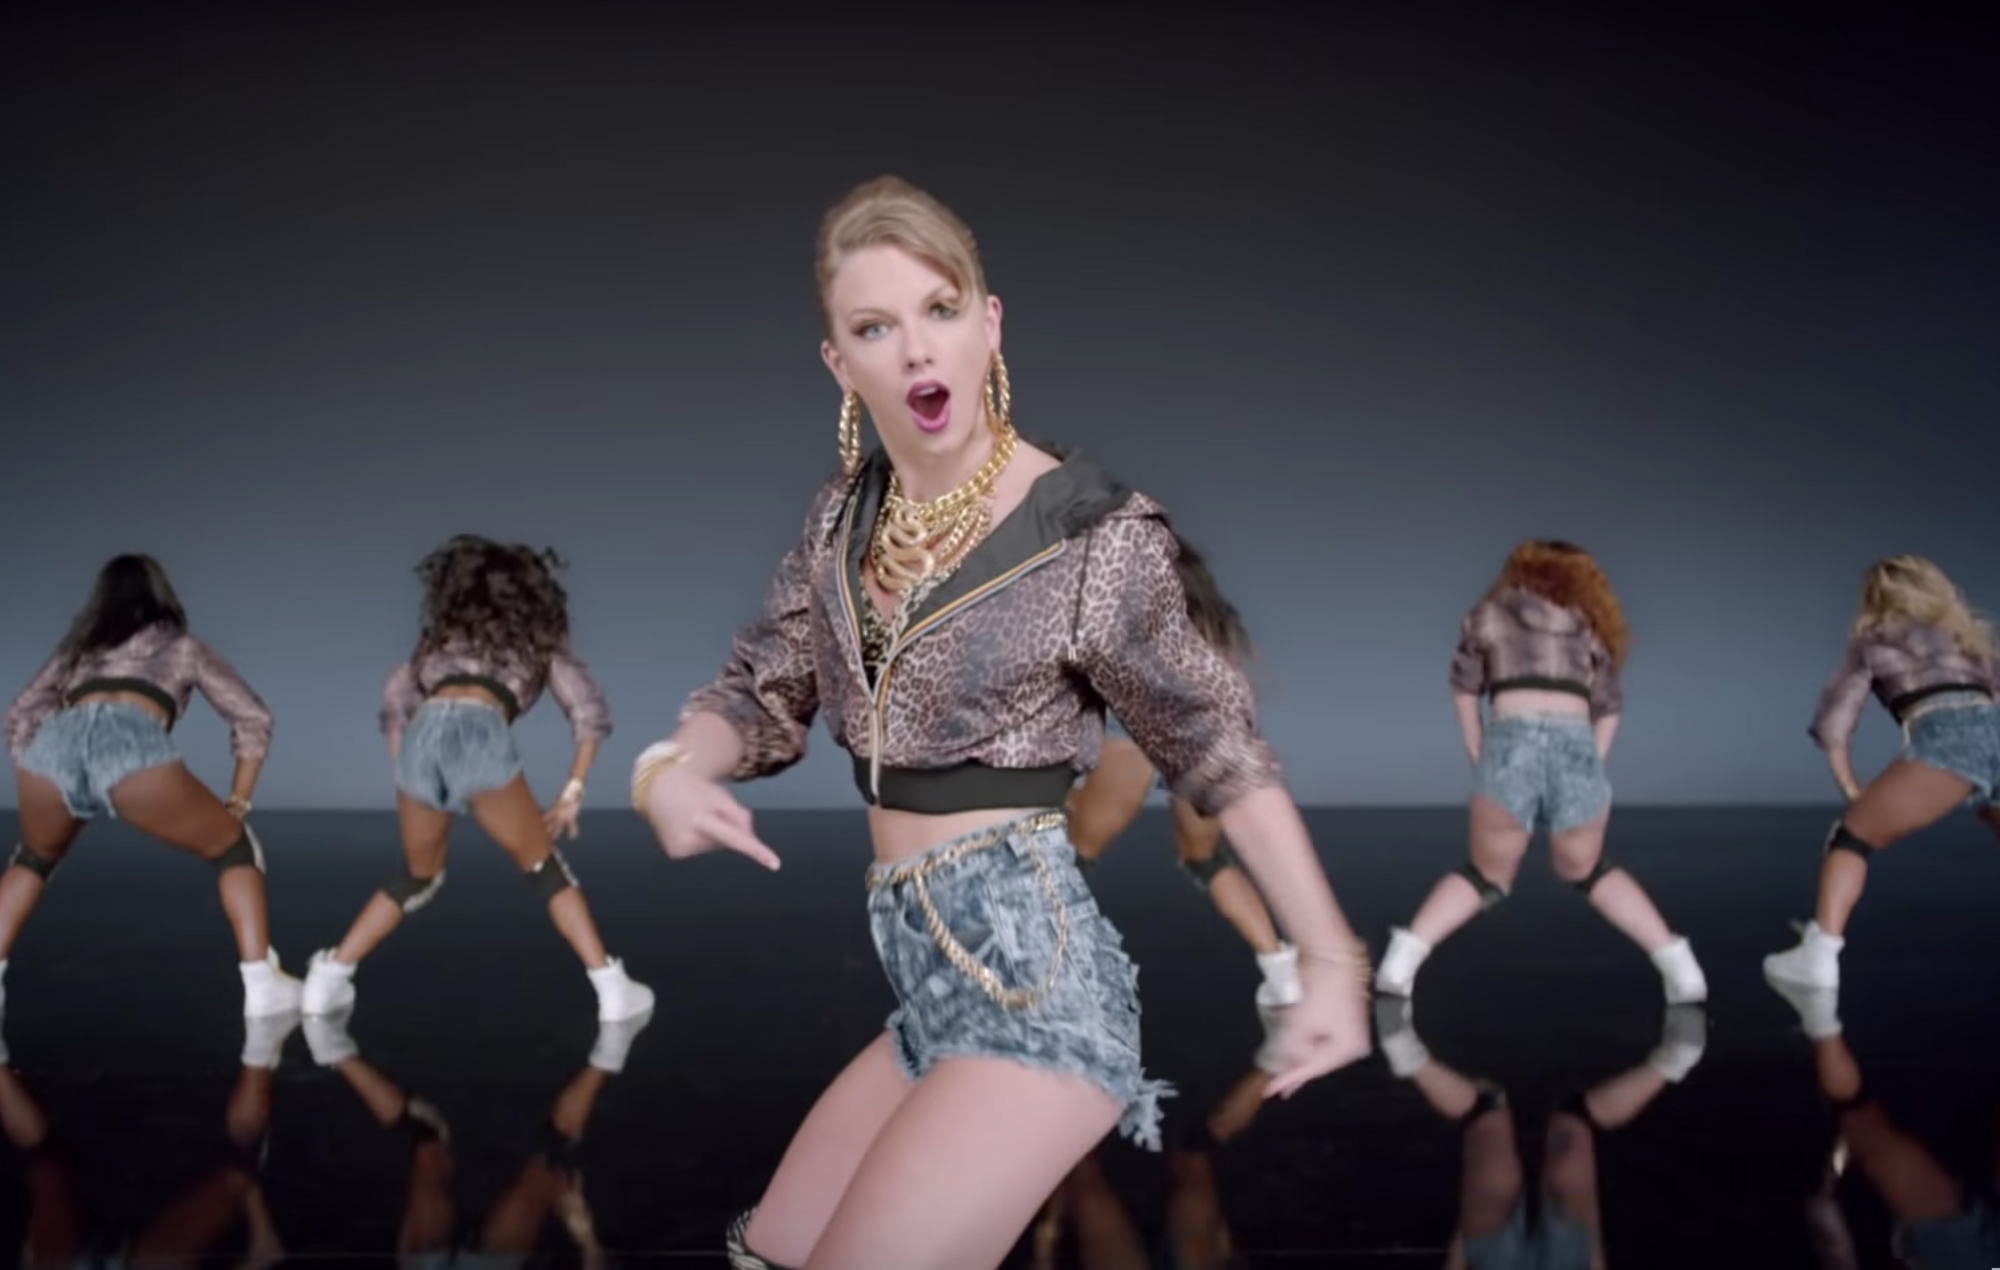 Taylor Swift Shake It Off Music Video 2@2000x1270 